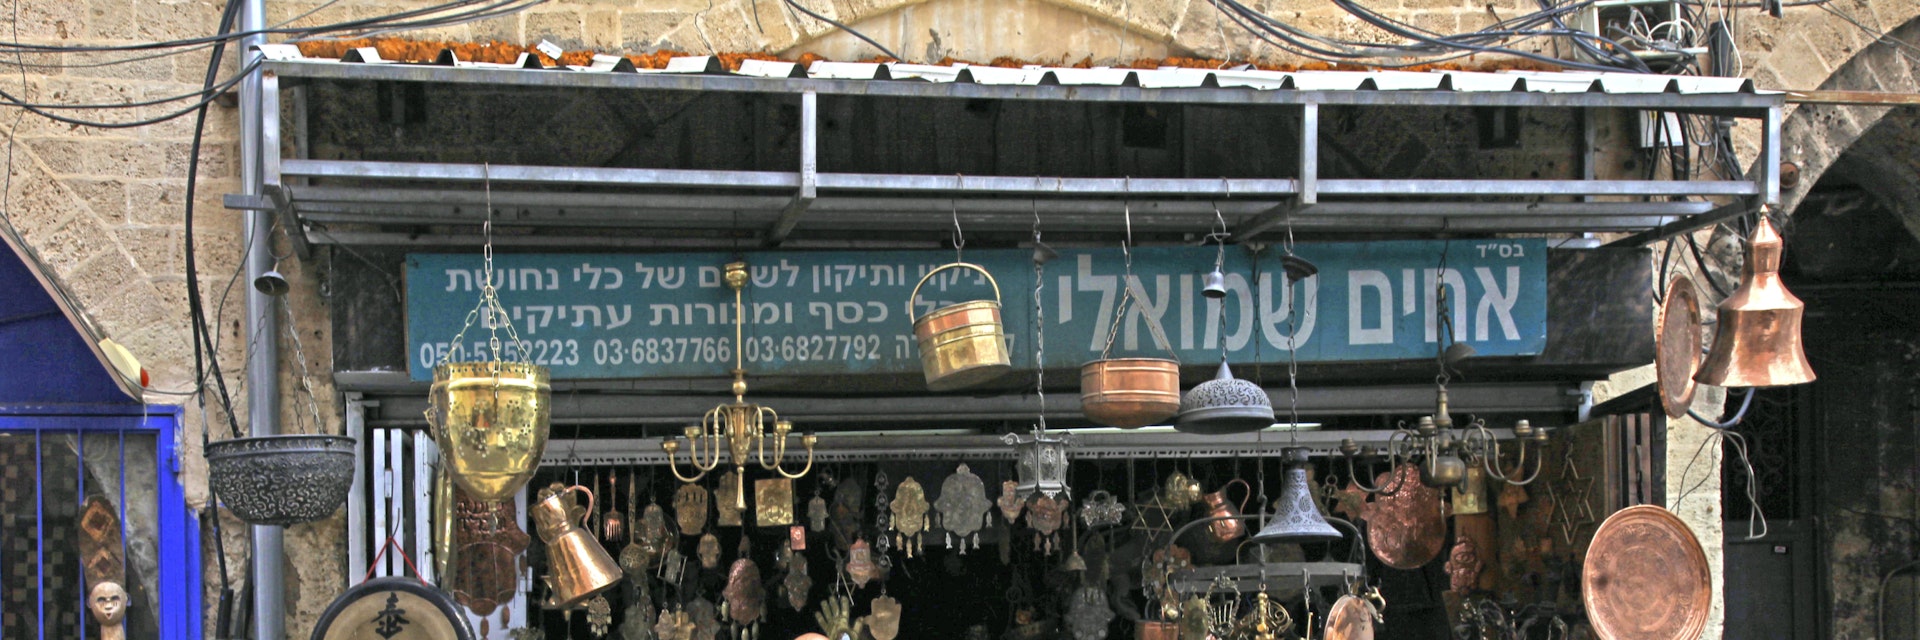 Tel Aviv, Israel - April 5, 2016: Visitors on The Flea Market, Shuk Hapishpeshim in old district Jaffa, Tel Aviv, Israel.